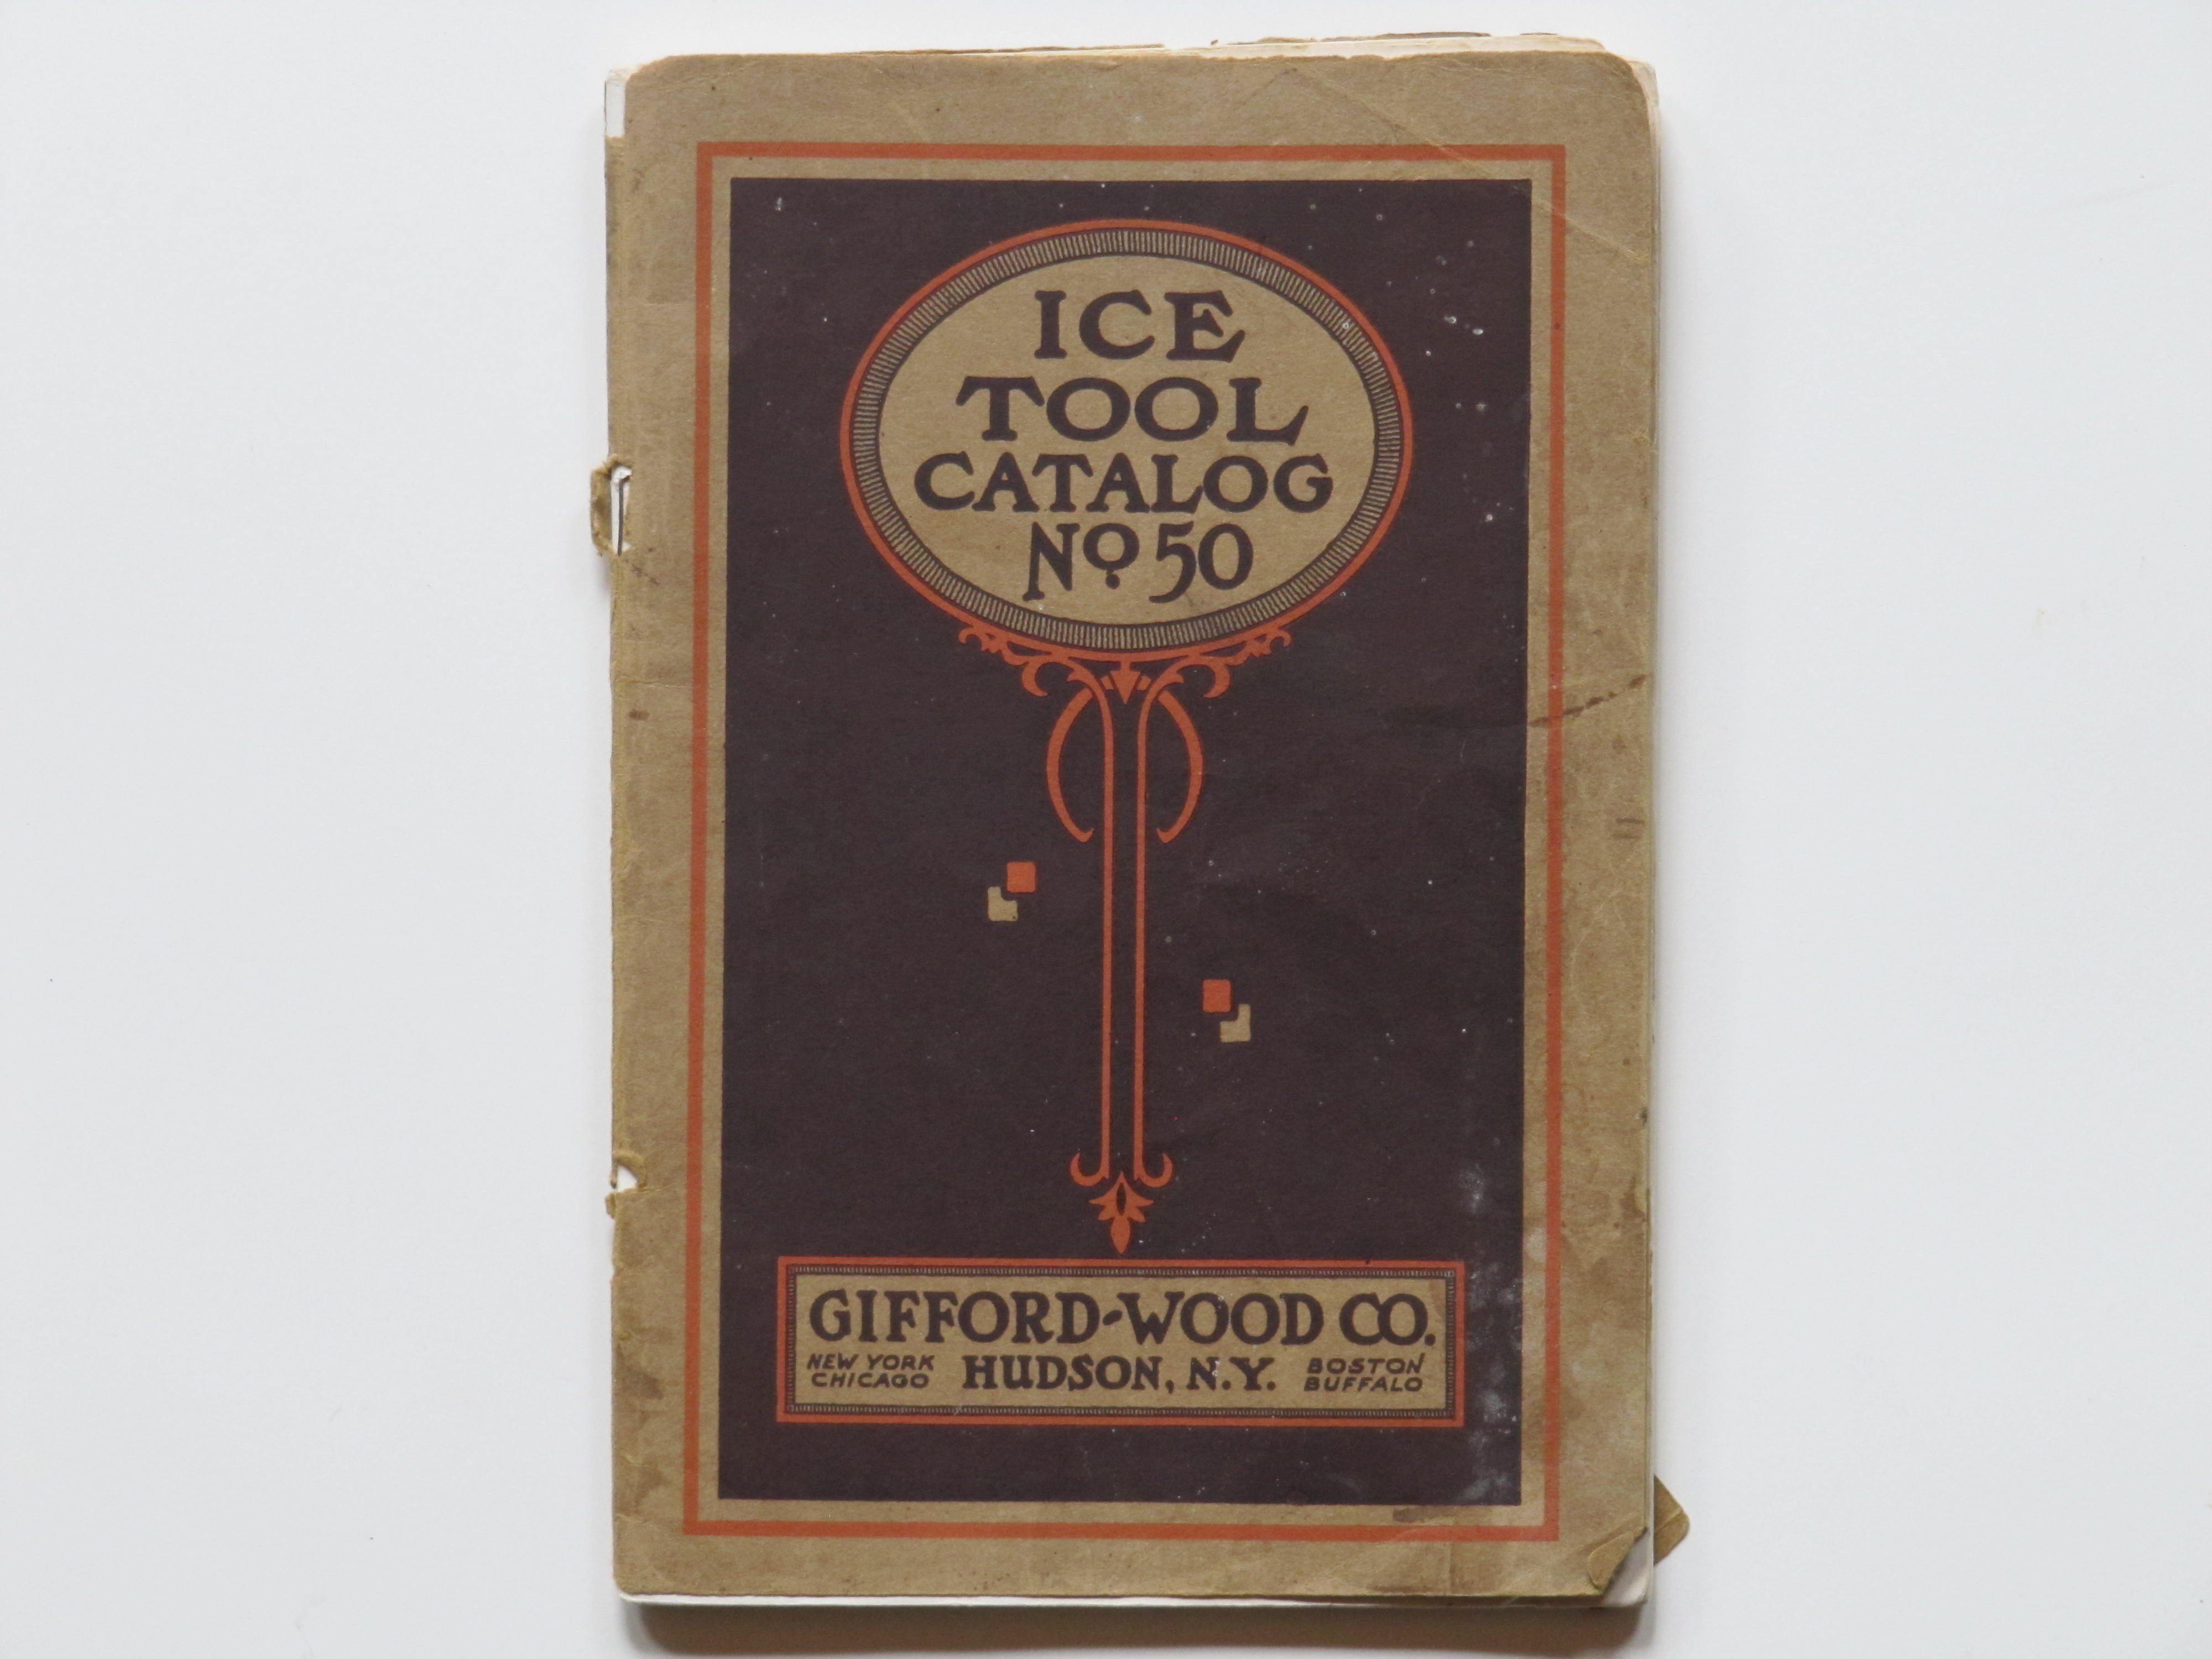 Gifford-Wood Co No50